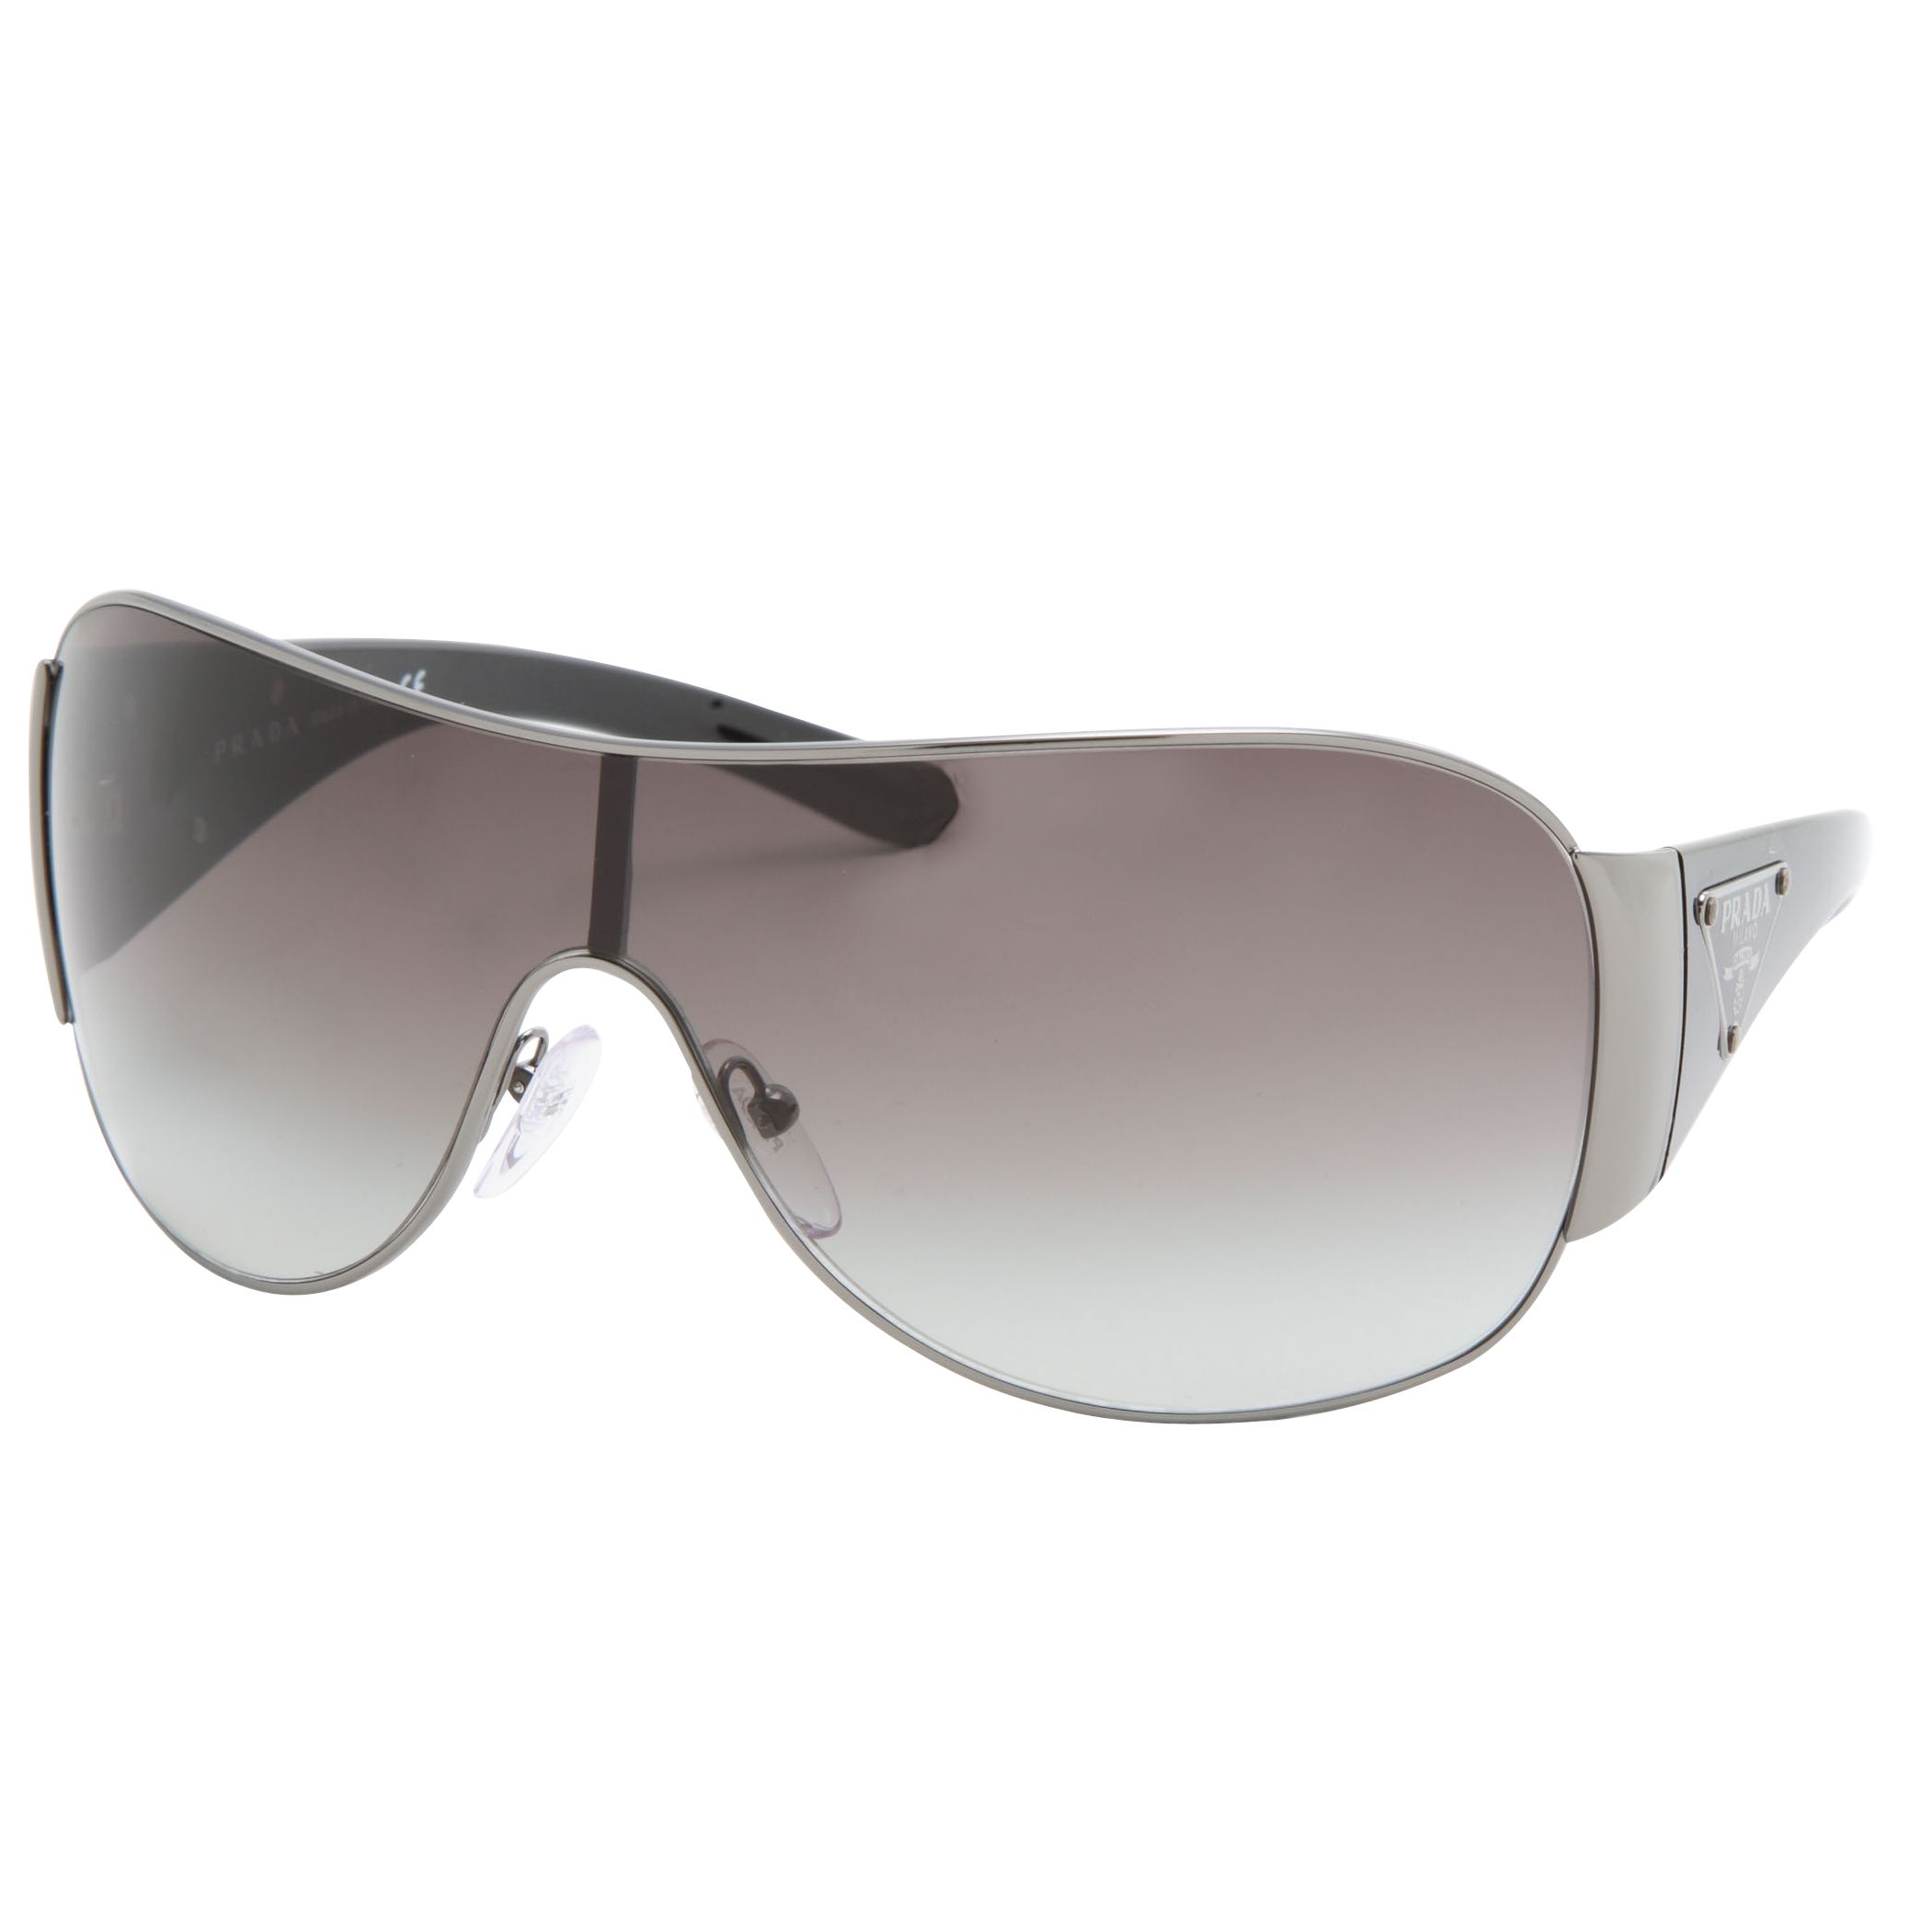 Prada Unisex Visor Sunglasses, Gunmetal, One Size at John Lewis